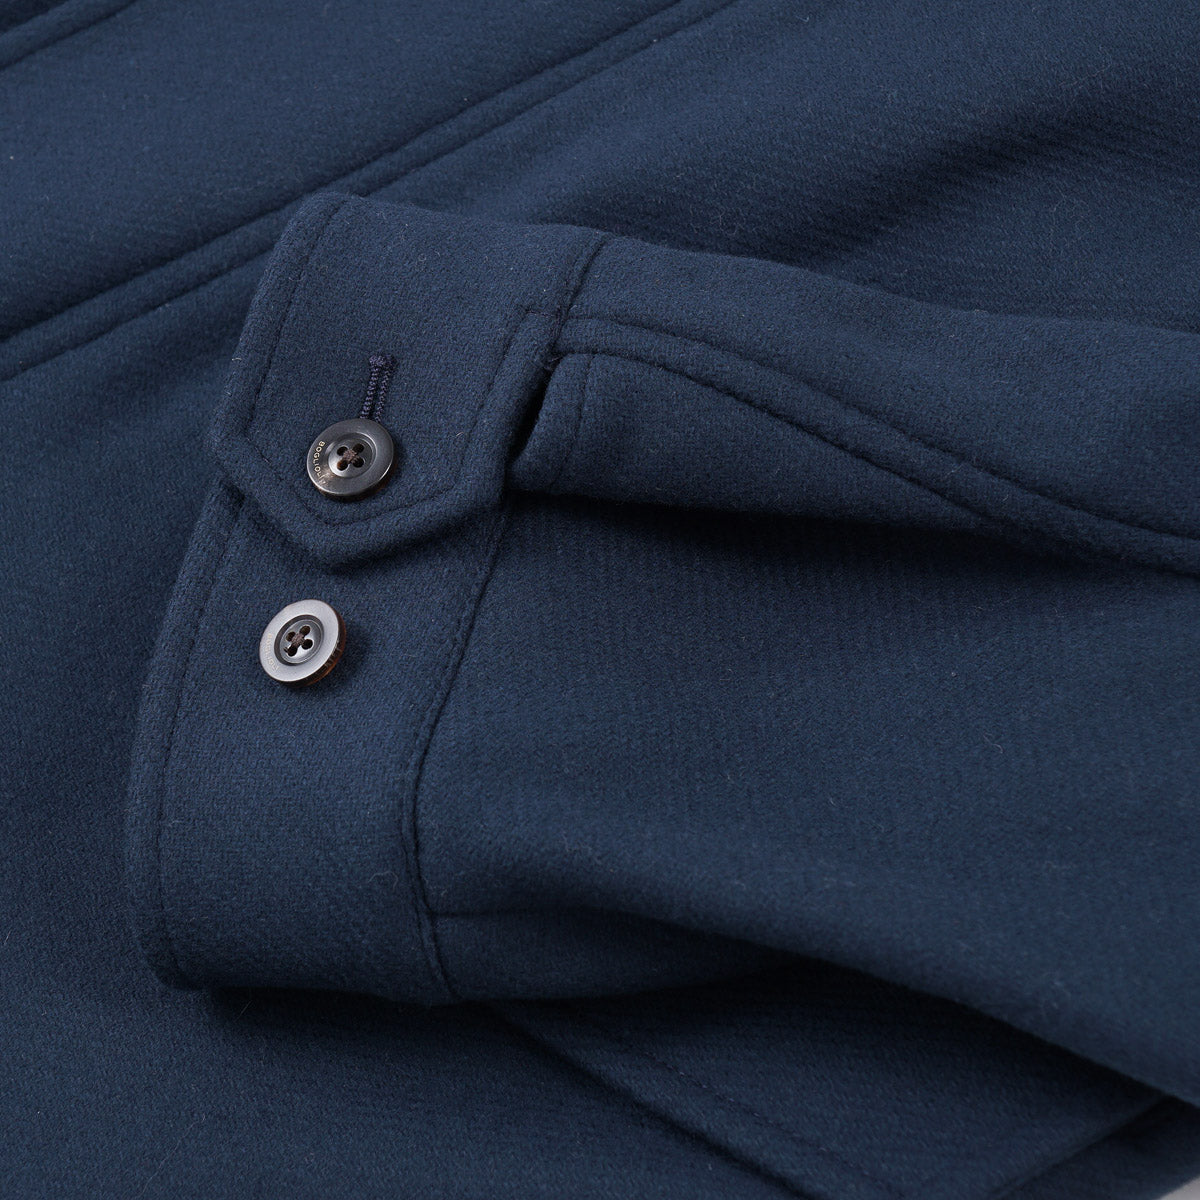 Boglioli Flannel Wool-Cashmere Field Jacket - Top Shelf Apparel